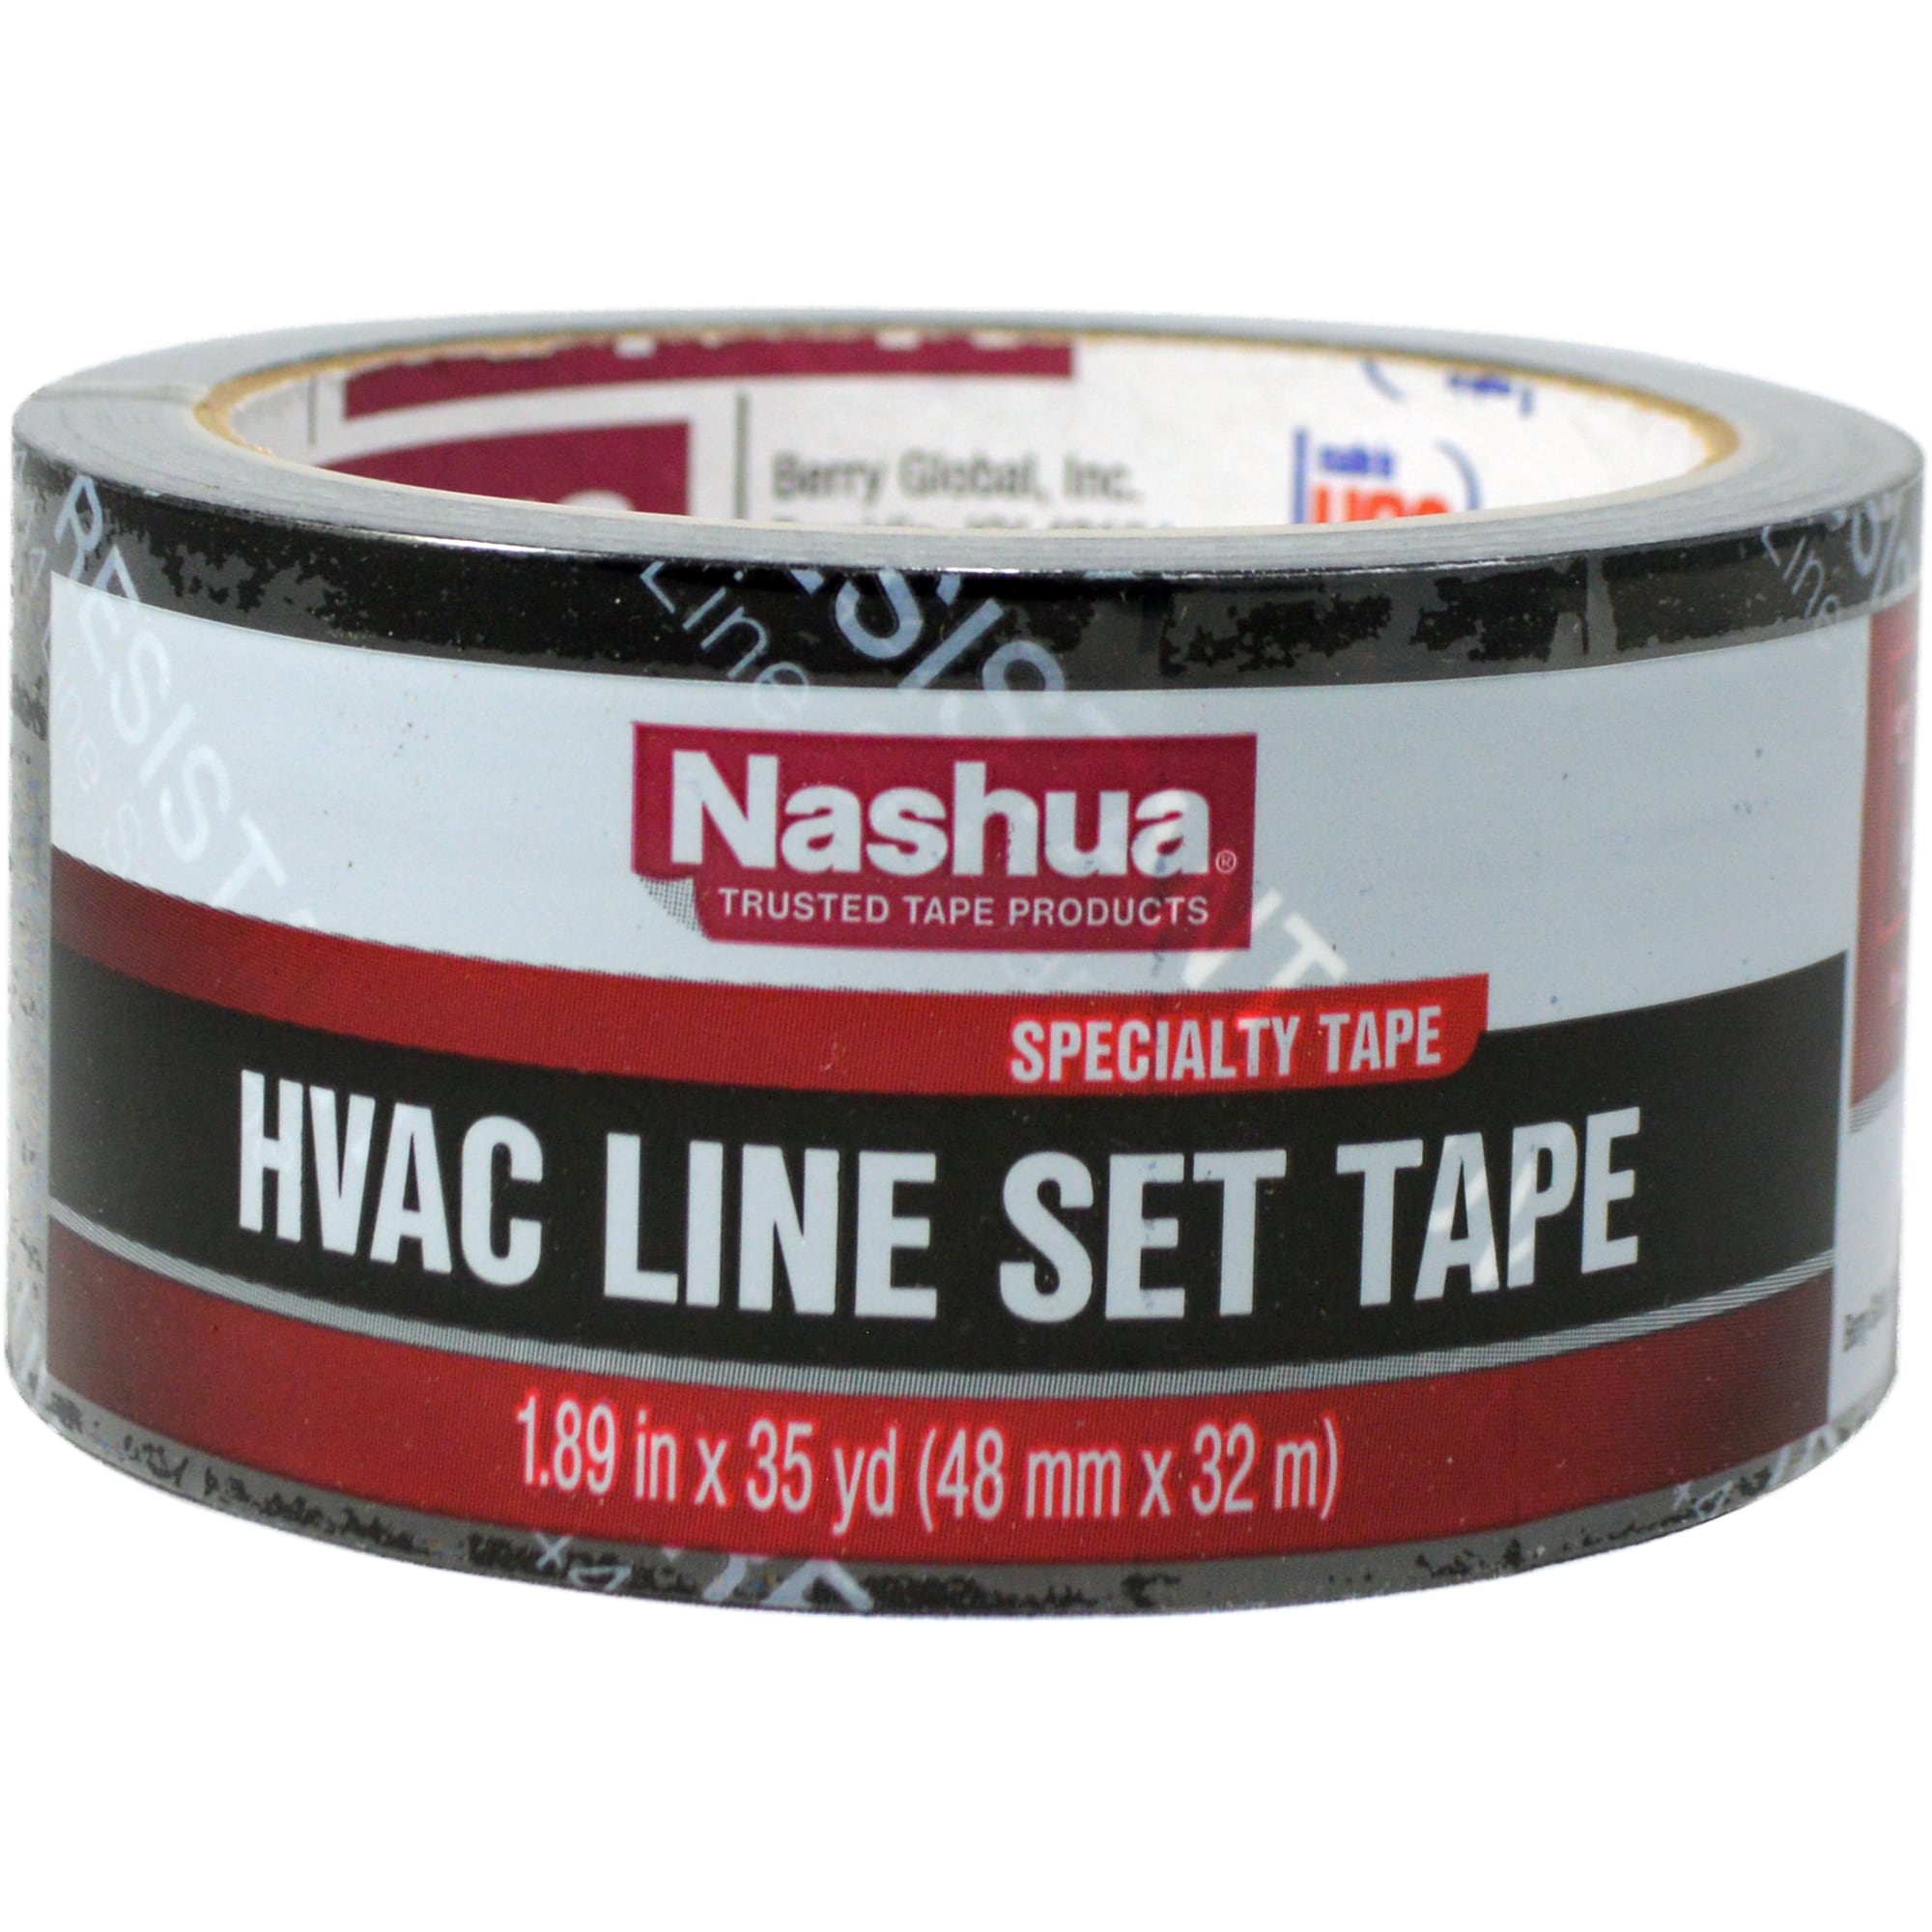 3M Foil Tape 3381 General Purpose HVAC Tape 1.88-in x 150-ft in